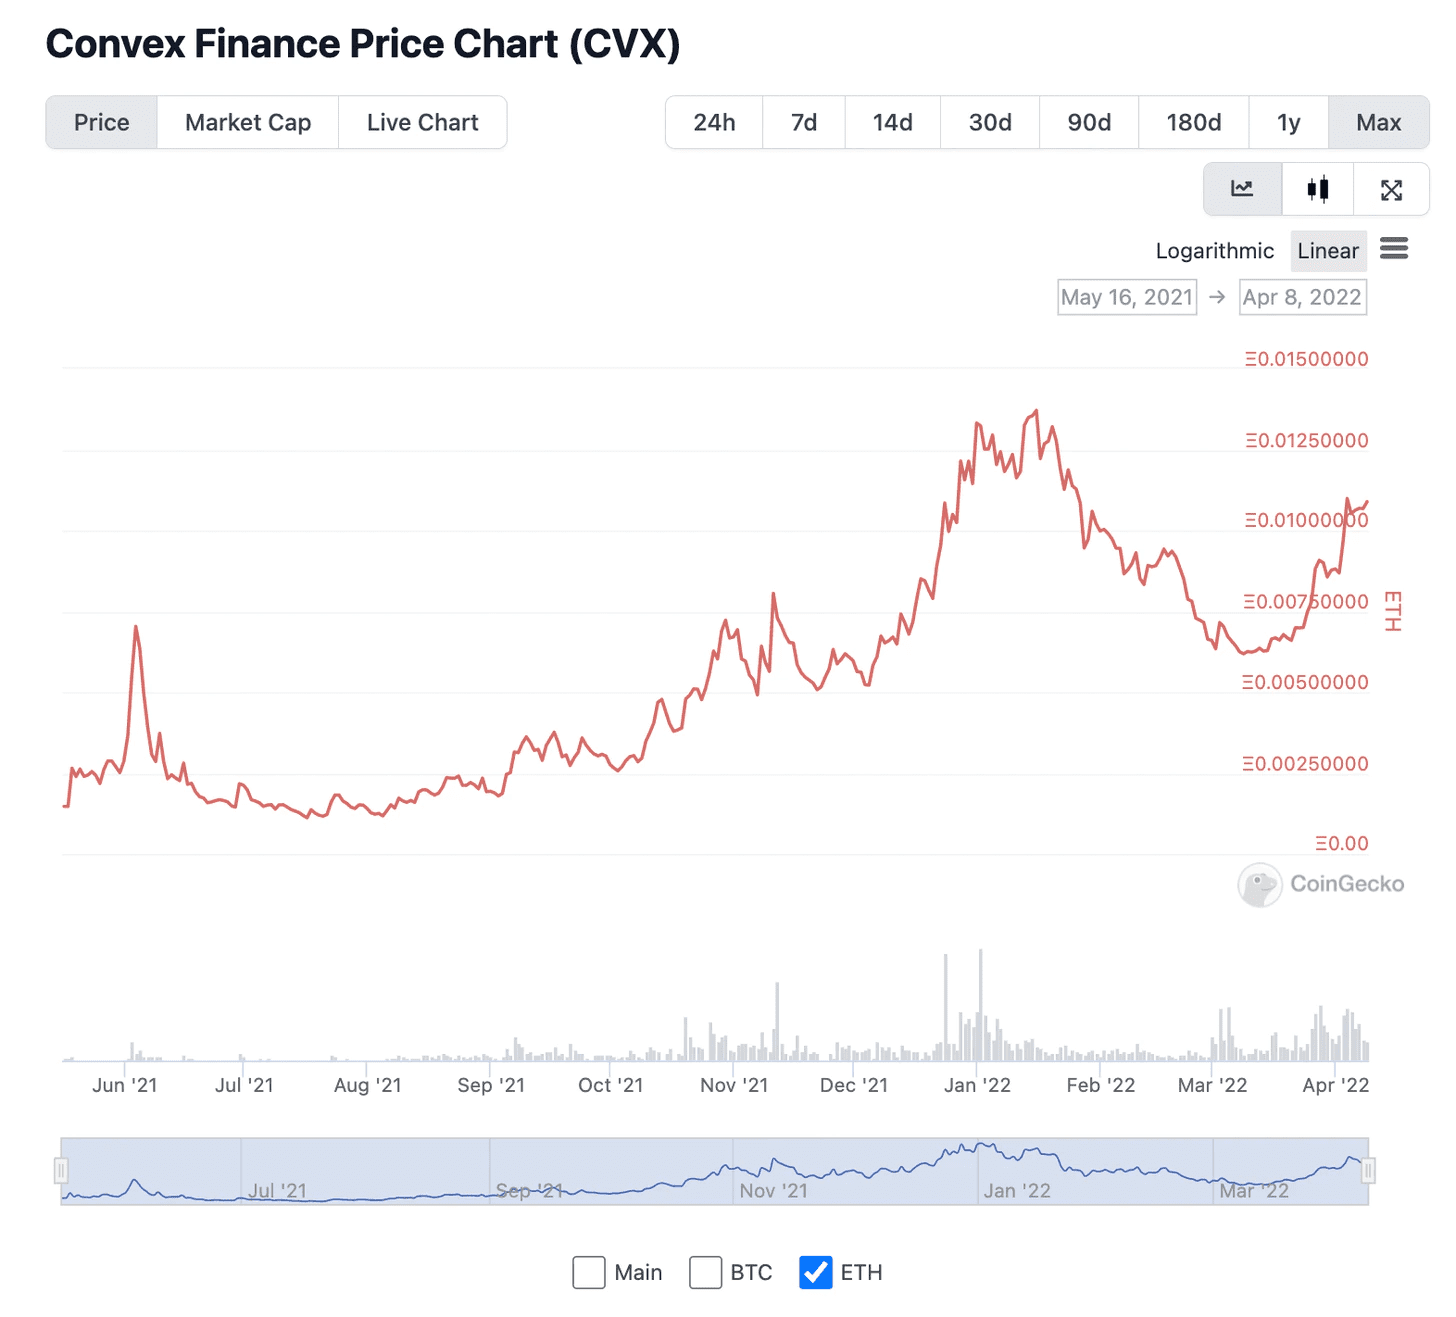 Convex Finance Price Chart (CVX)